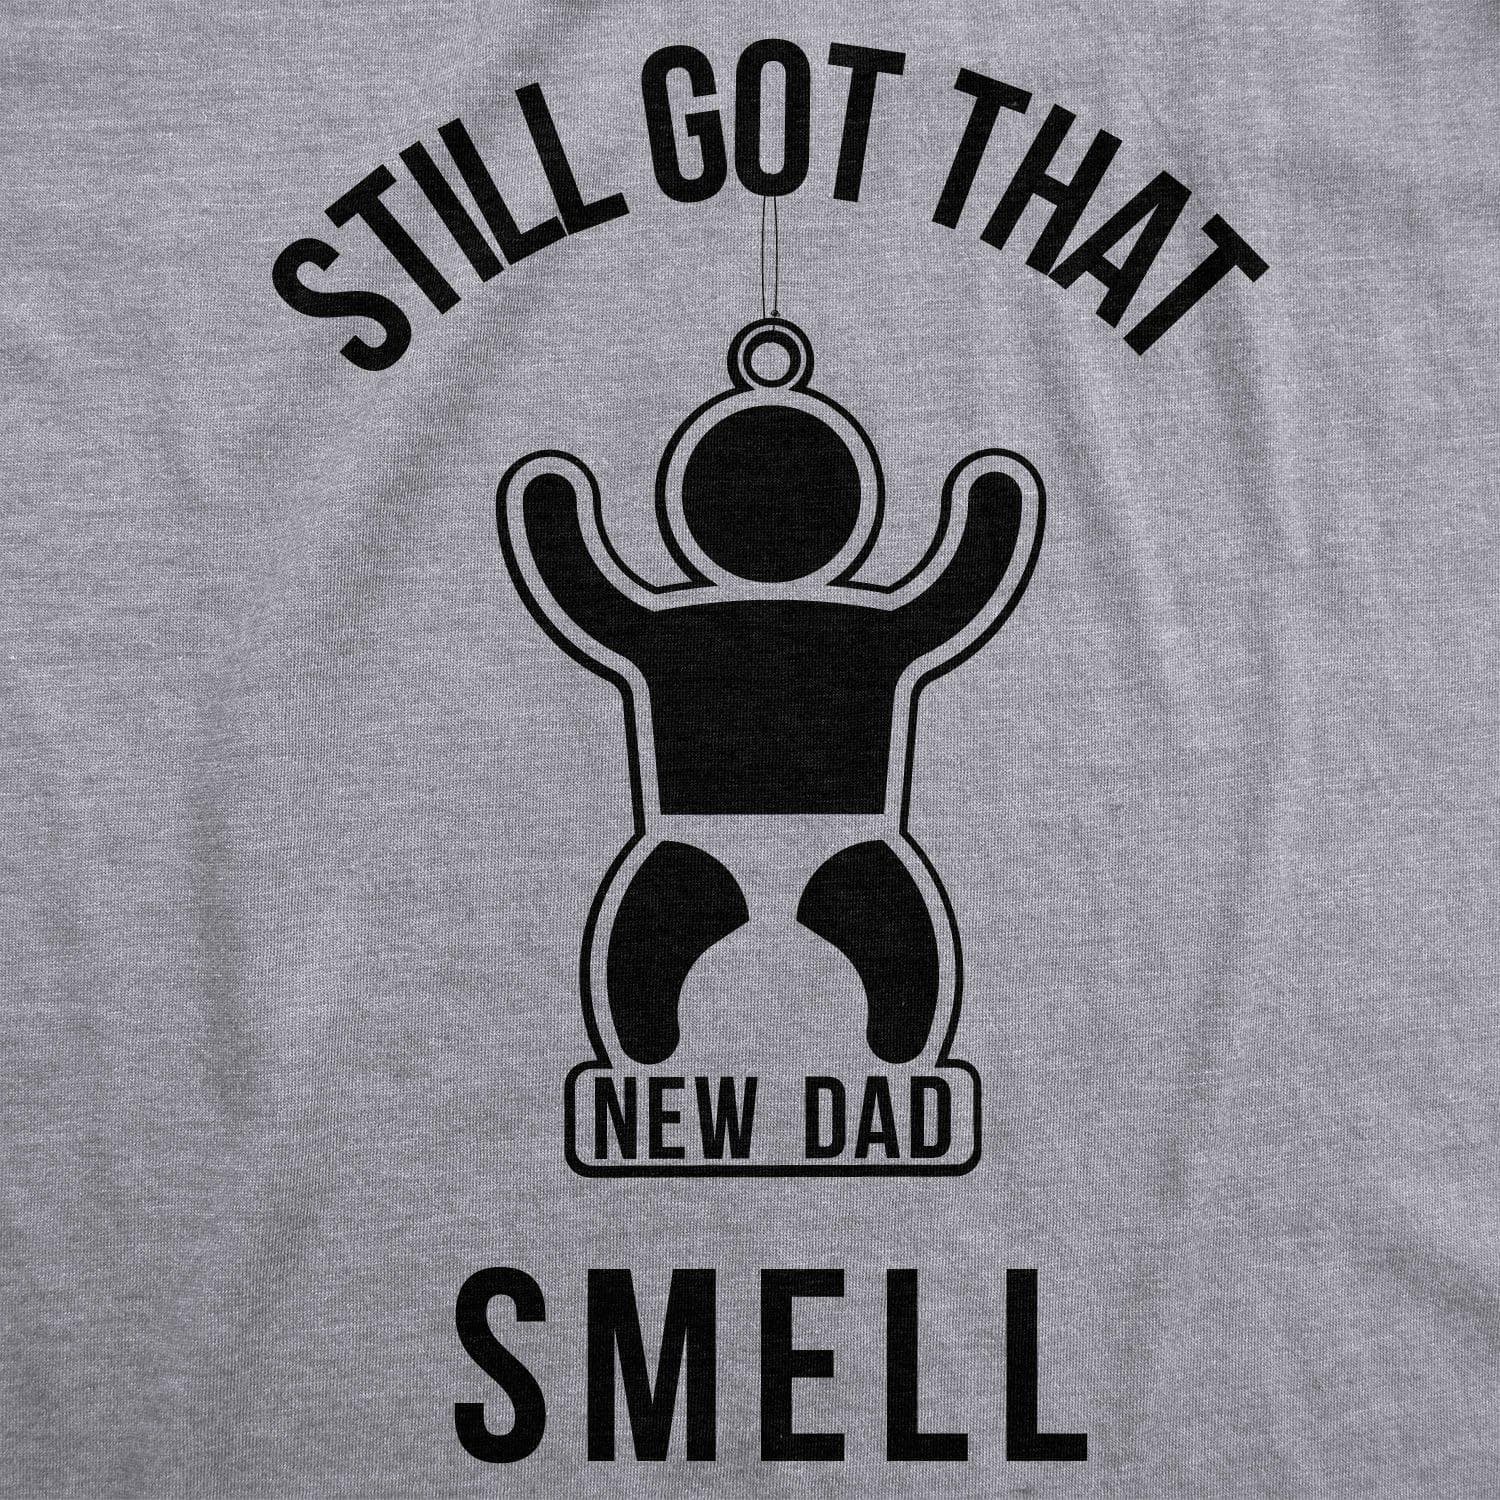 Still Got That New Dad Smell Men's Tshirt  -  Crazy Dog T-Shirts